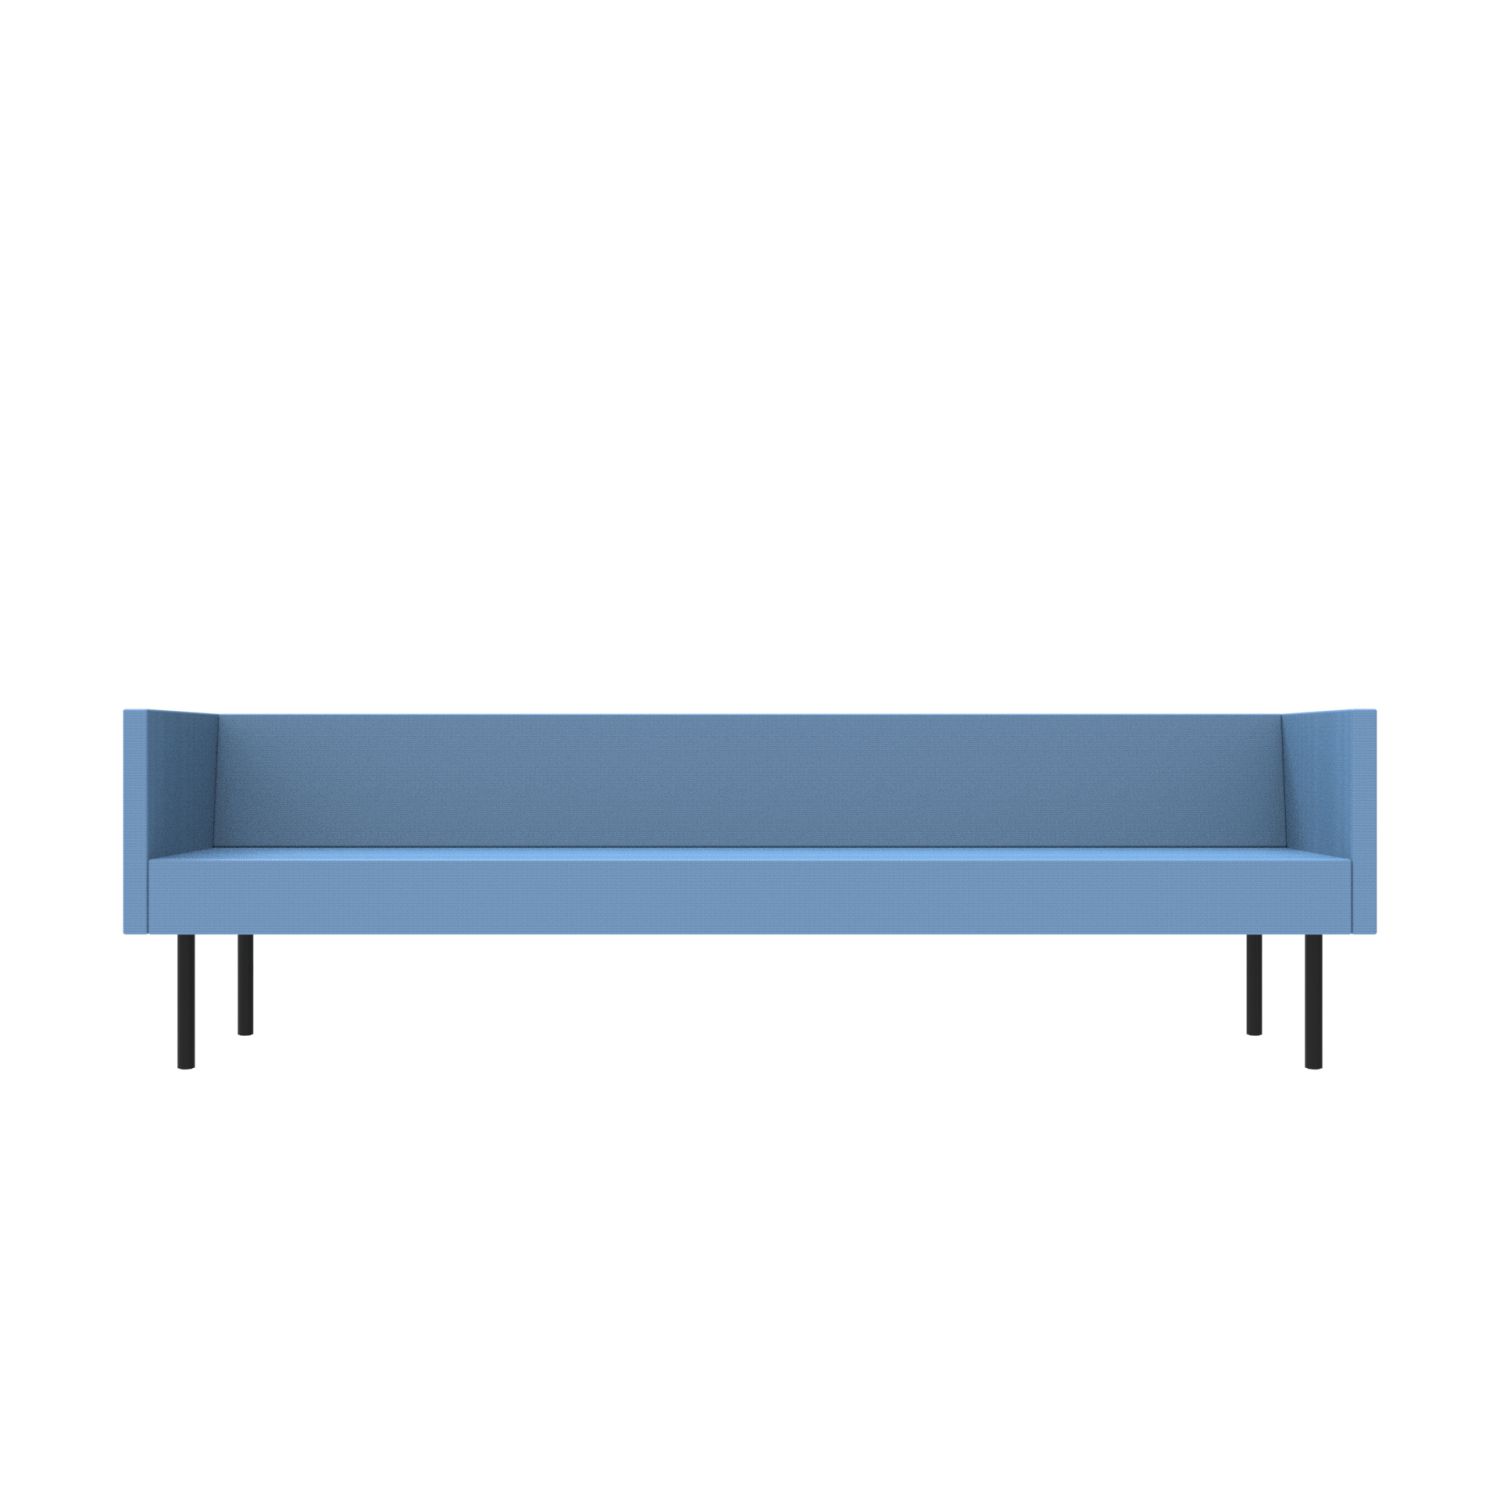 lensvelt rick minkes no idea sofa low back width 256 cm depth 70 cm height 73 cm blue horizon 040 black ral9005